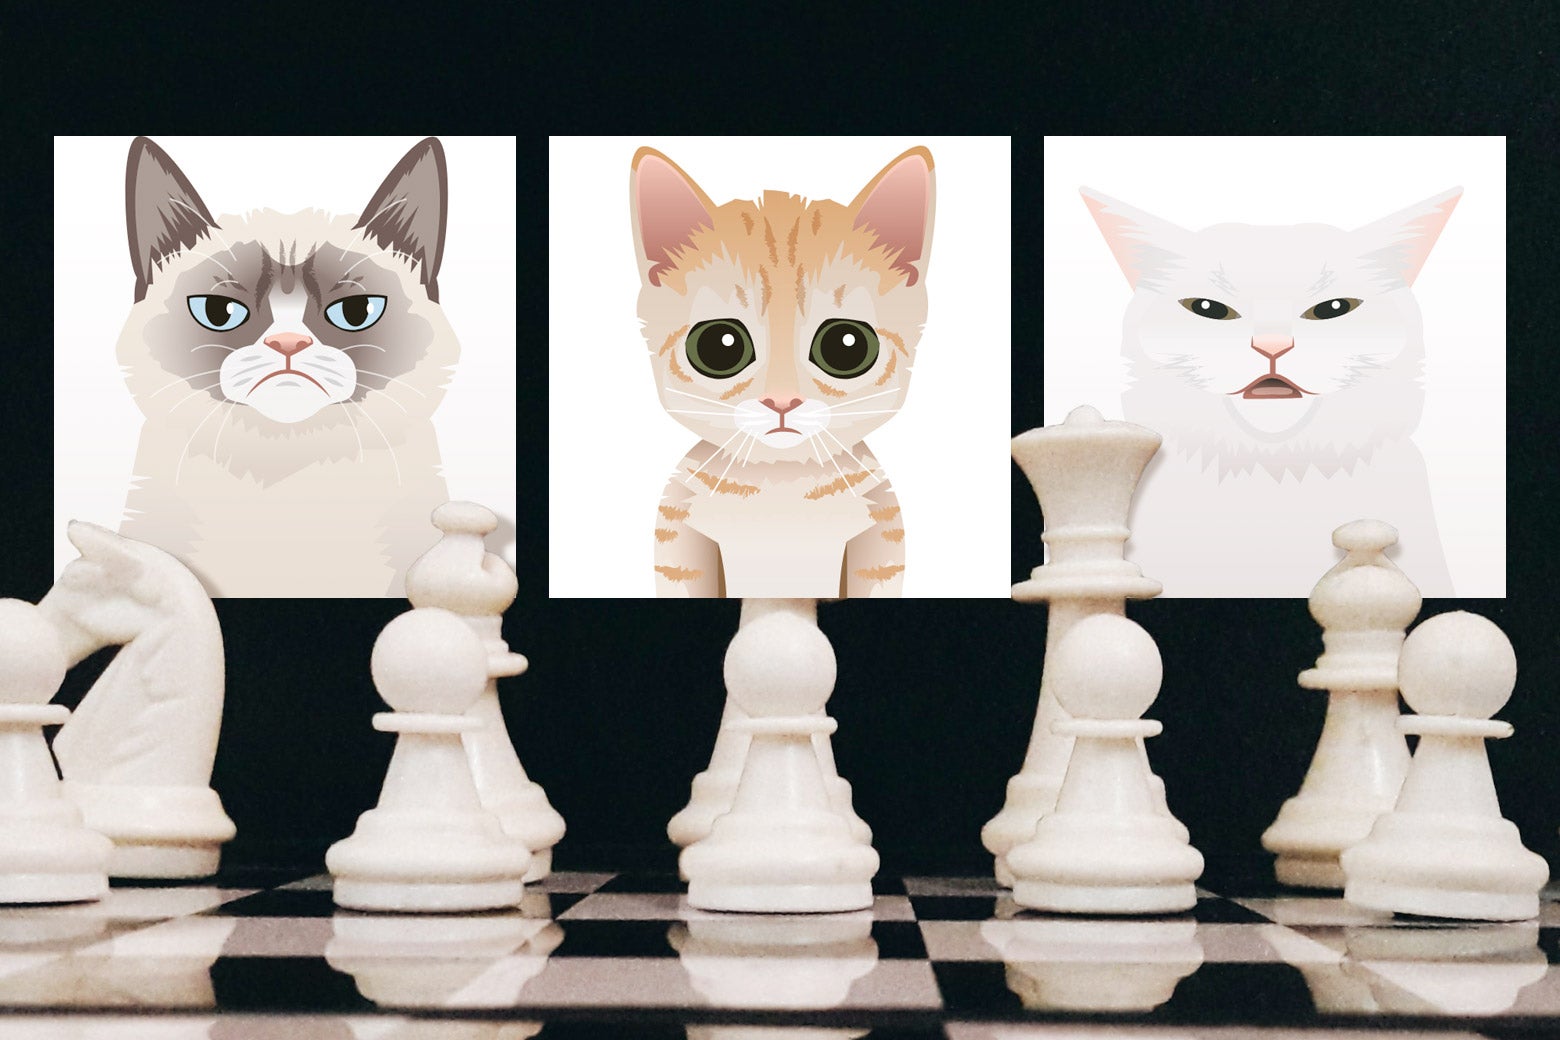 Three cat avatars above a chess set.